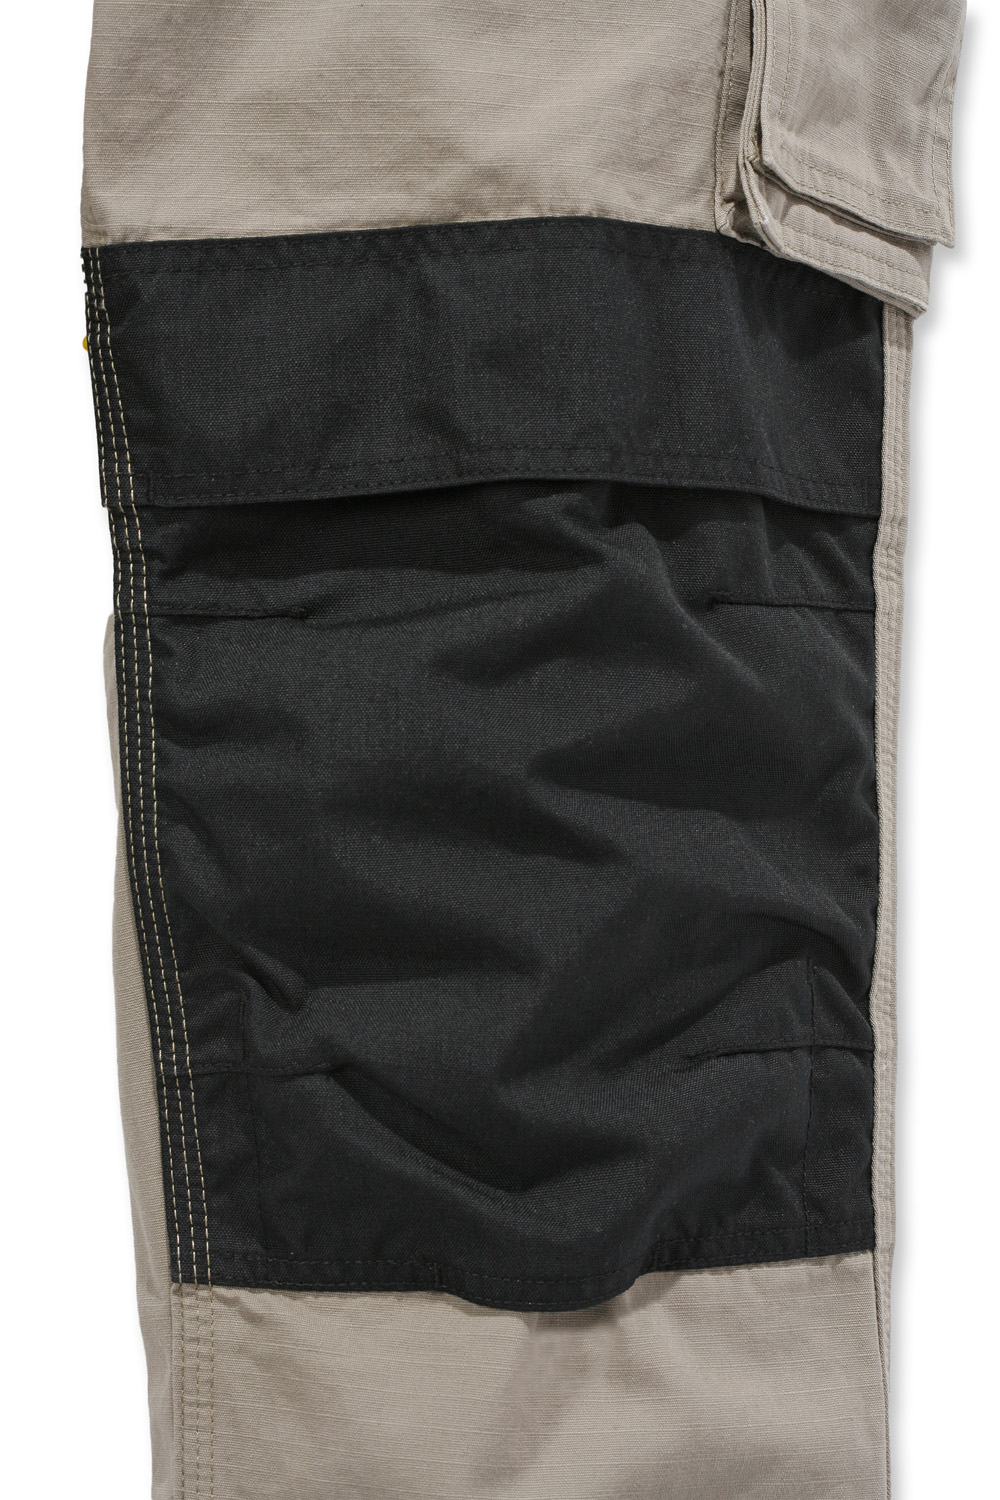 Carhartt Multi Pocket Ripstop Pant, 100233